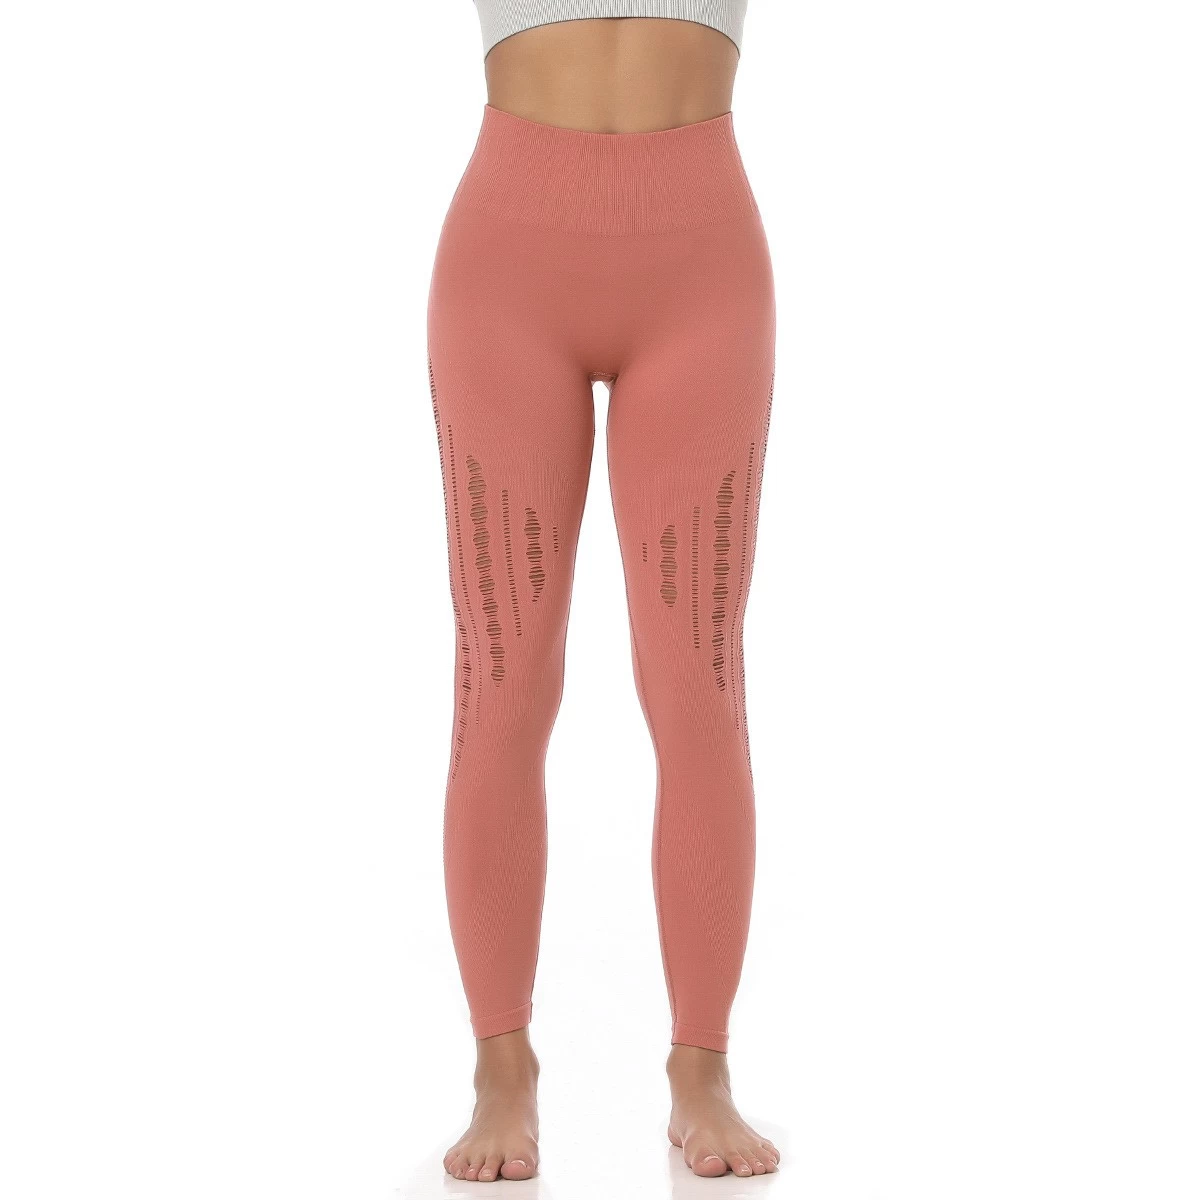 S-SHAPER Seamless Women Yoga Leggings Quick drying Running Pants Mesh High Waist Workout Tights Manufacturer